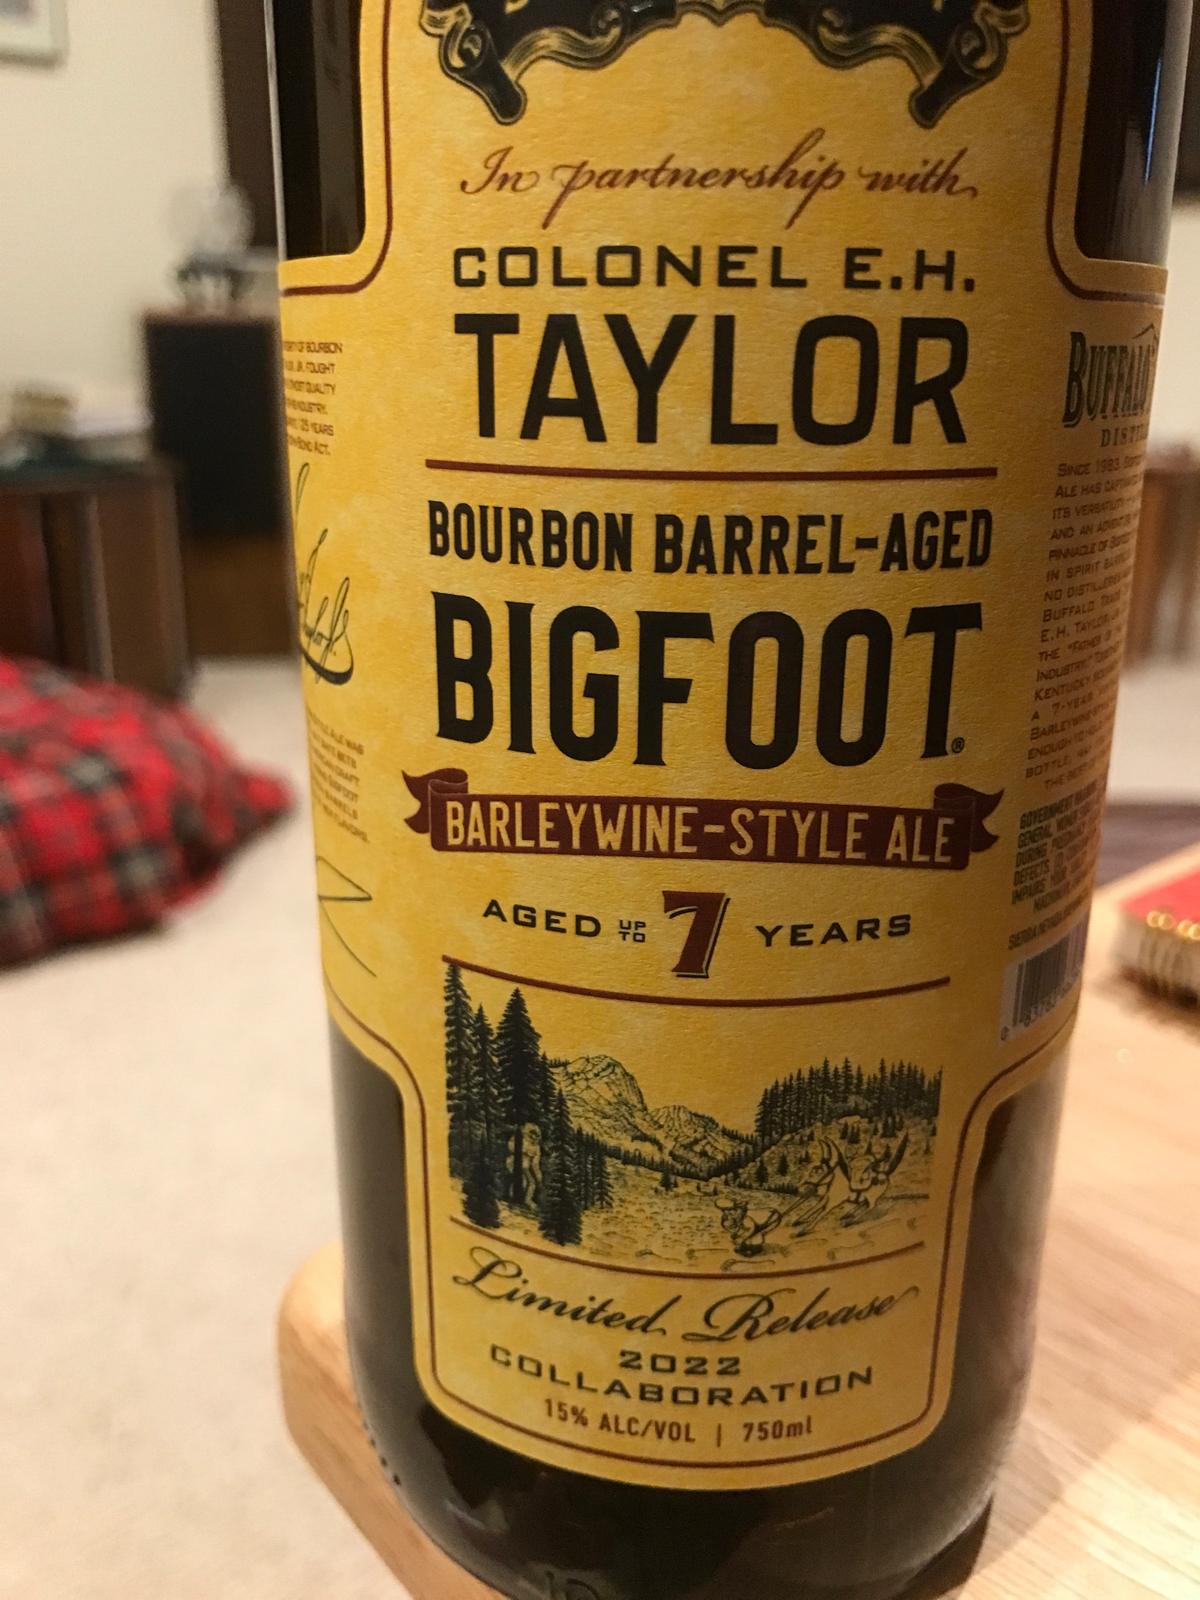 Bigfoot (Colonel E.H. Taylor Bourbon Barrel Aged)